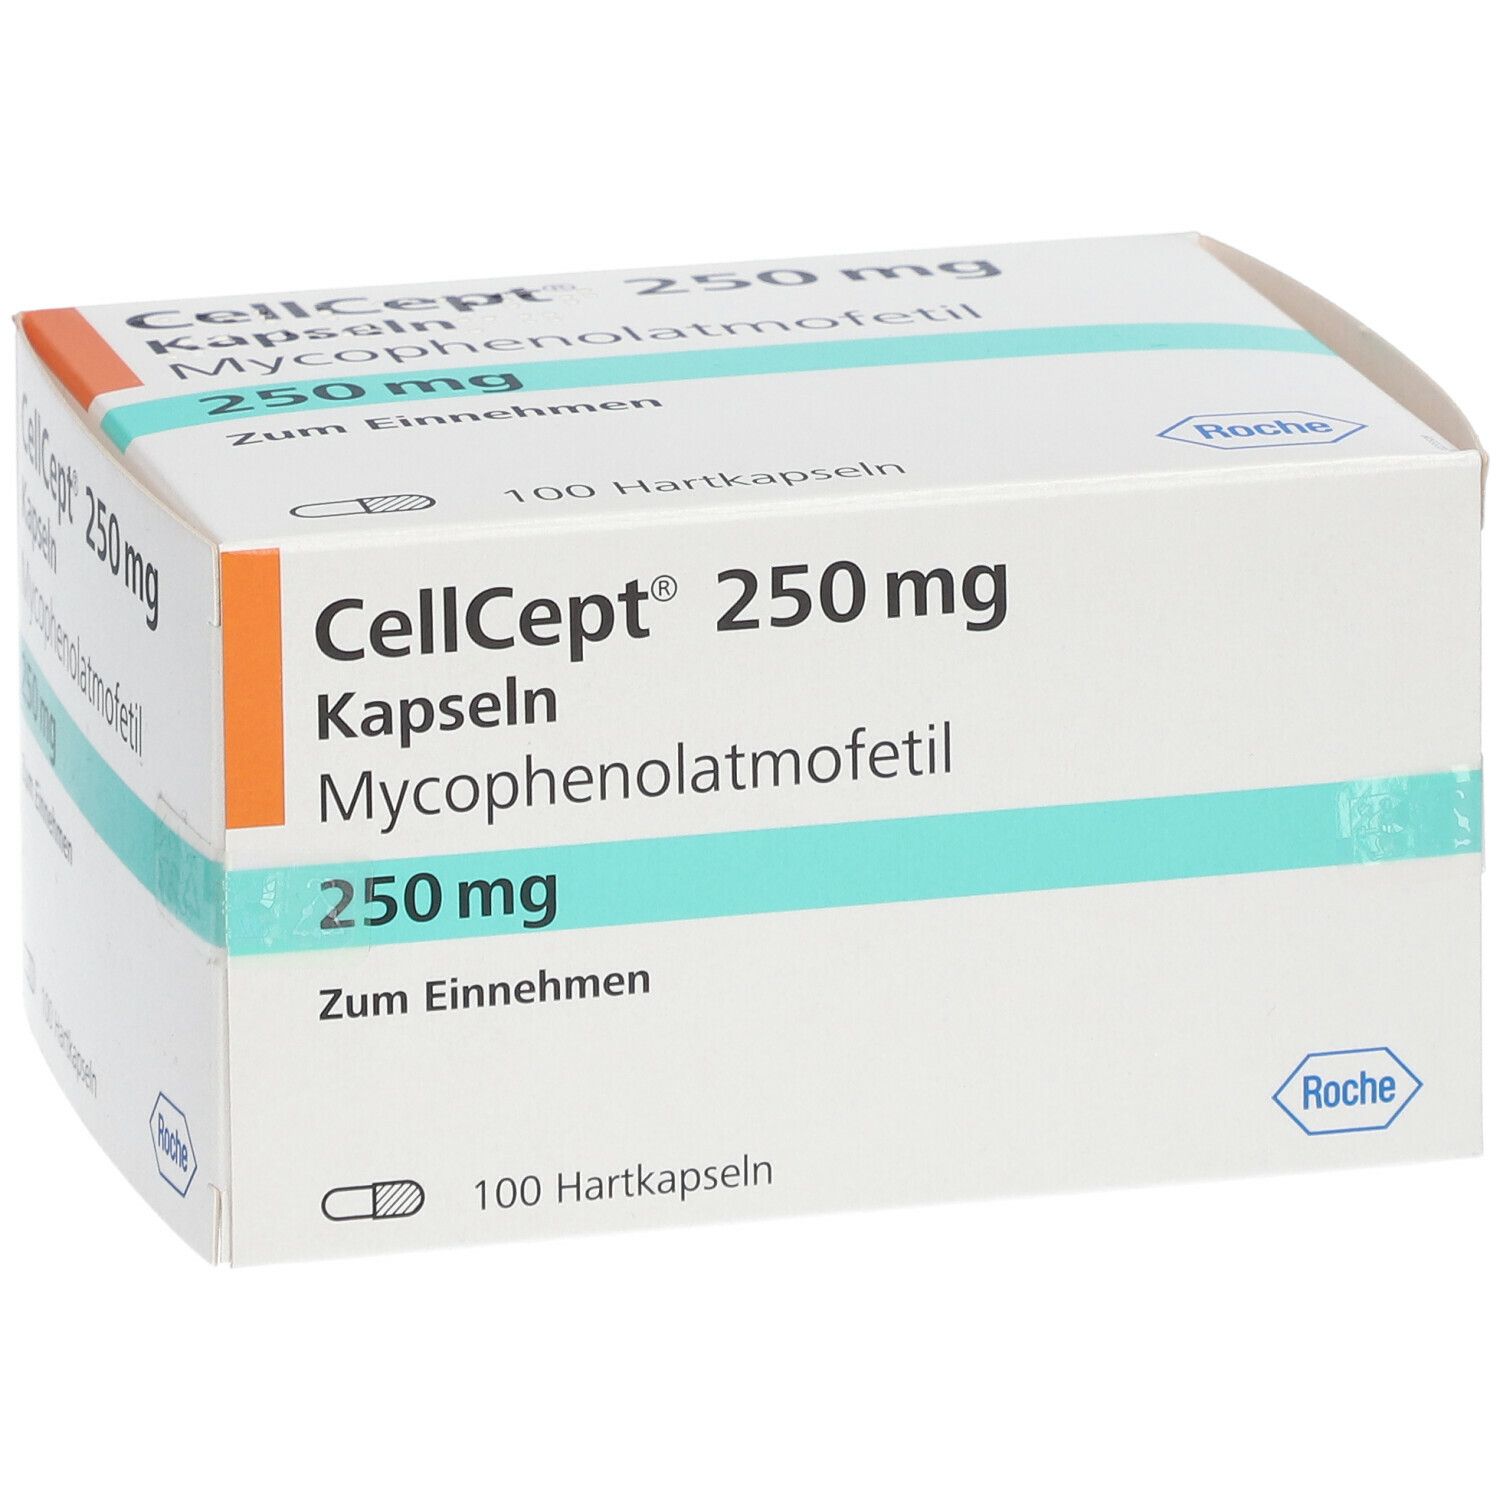 CellCept® 250 mg